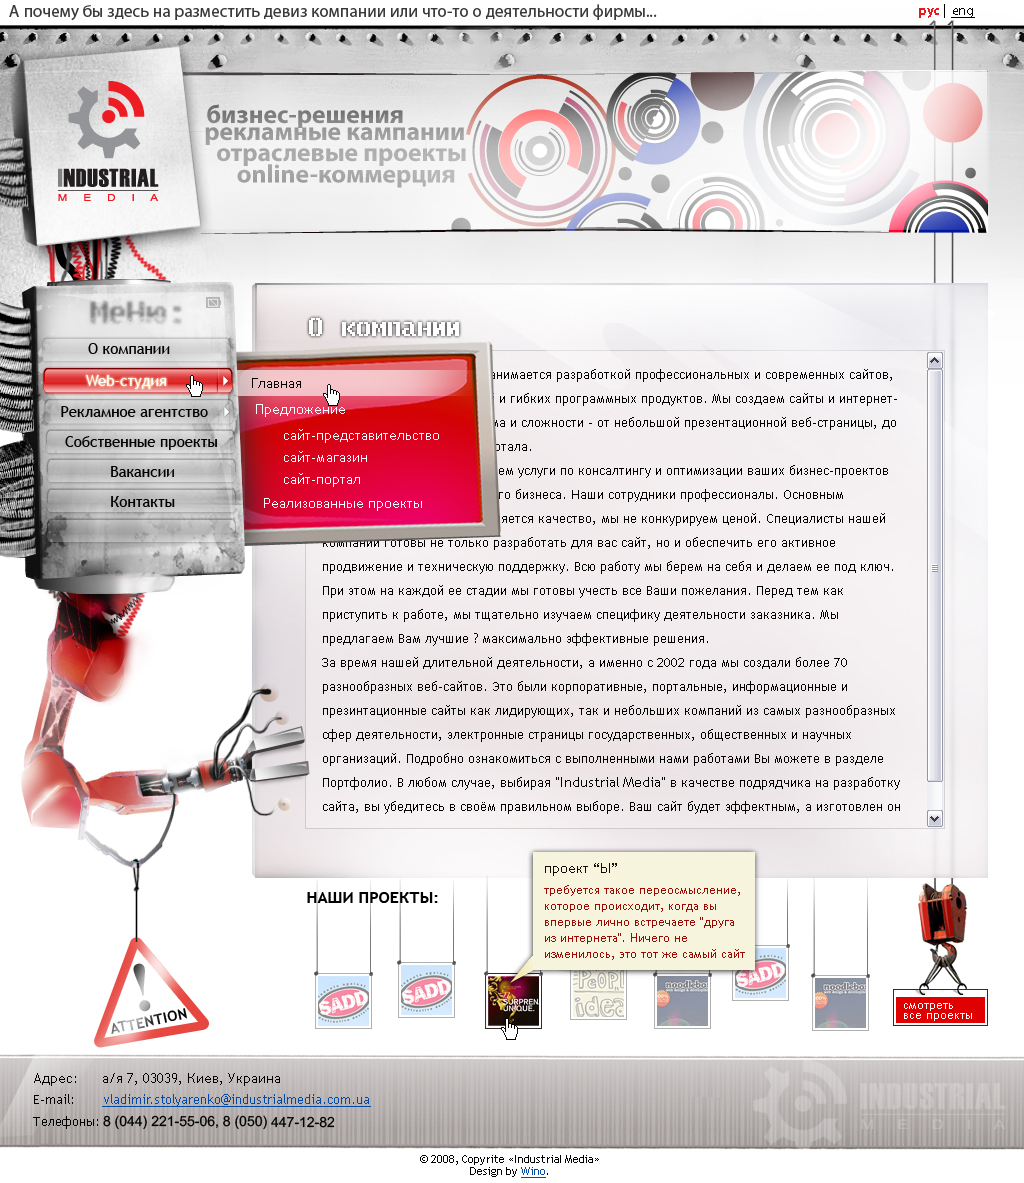 макет сайта фирмы web-разработчика "IndustrialMedia" (шапка флеш)